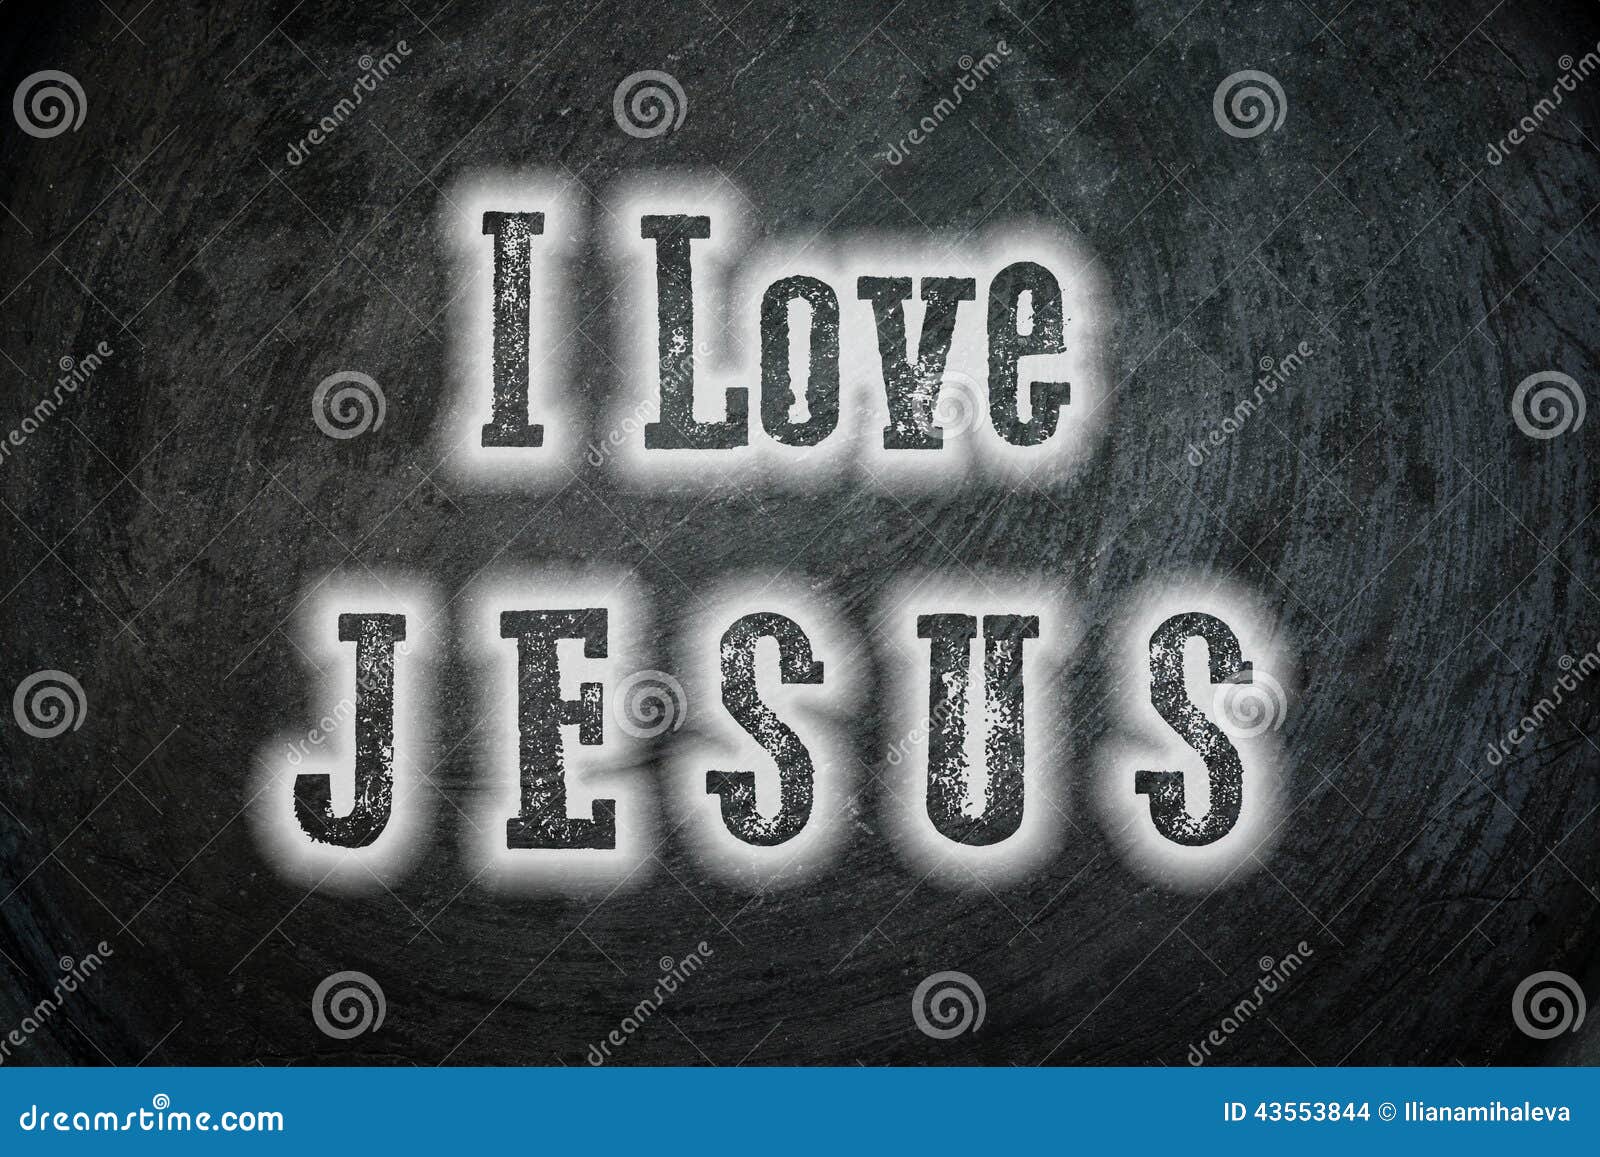 Yes I DoWith All My Heart  Christian cross wallpaper Jesus loves  me Cross wallpaper